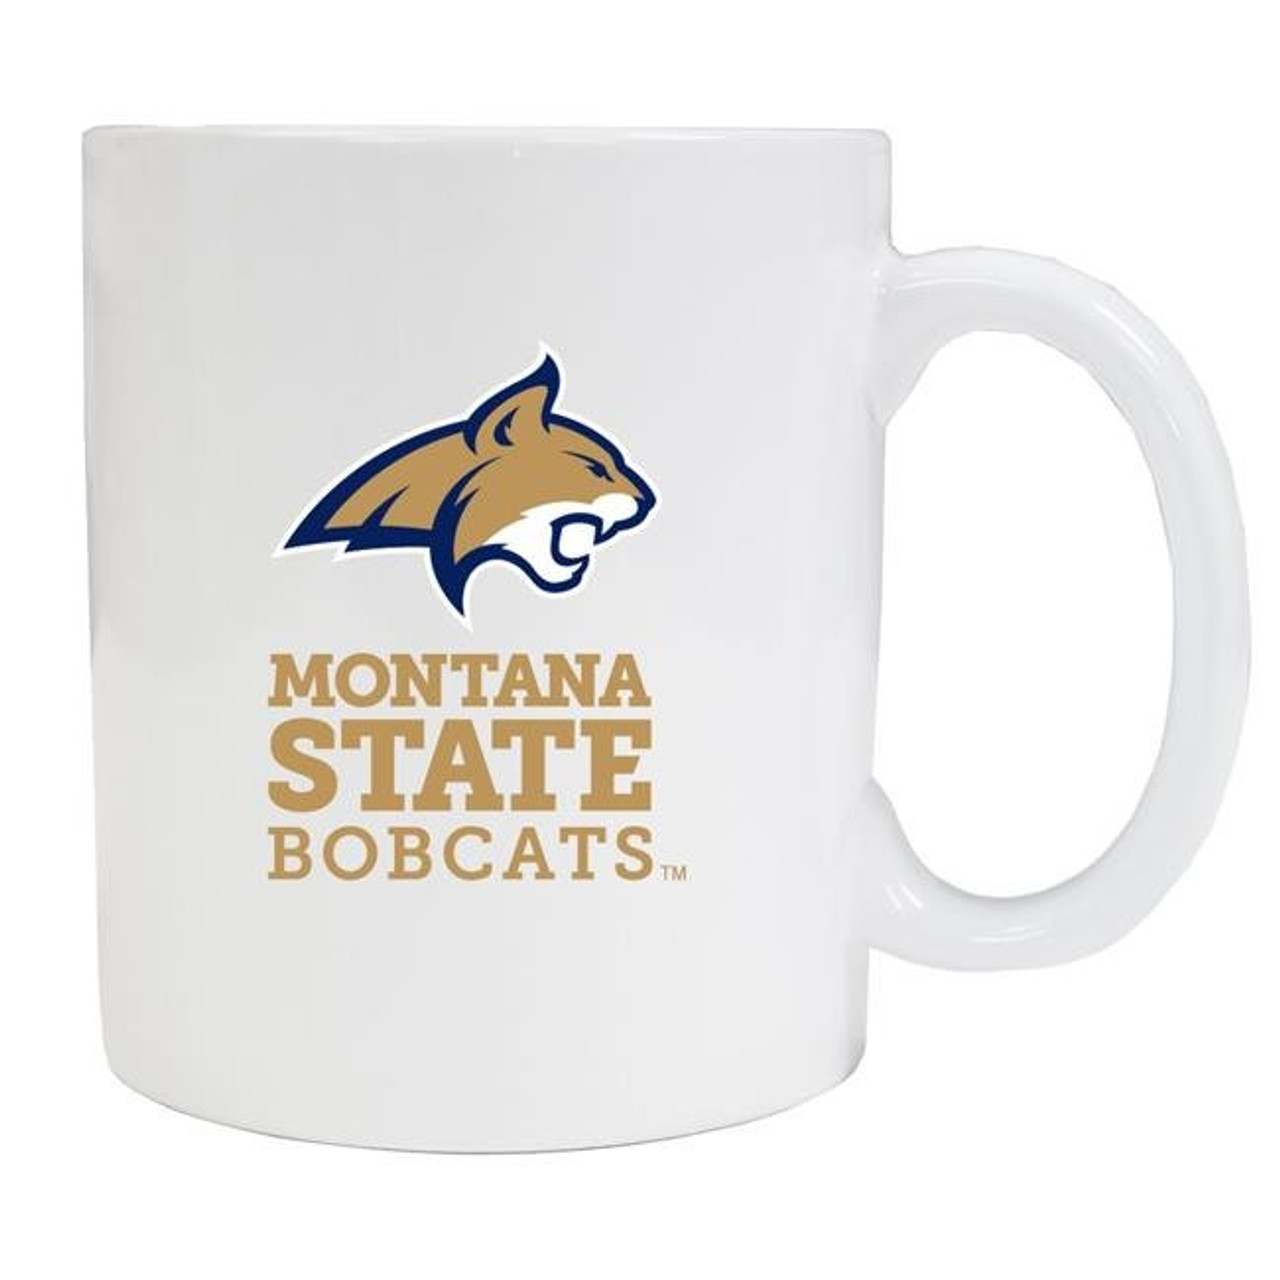 Montana State Bobcats White Ceramic Mug 2-Pack (White).